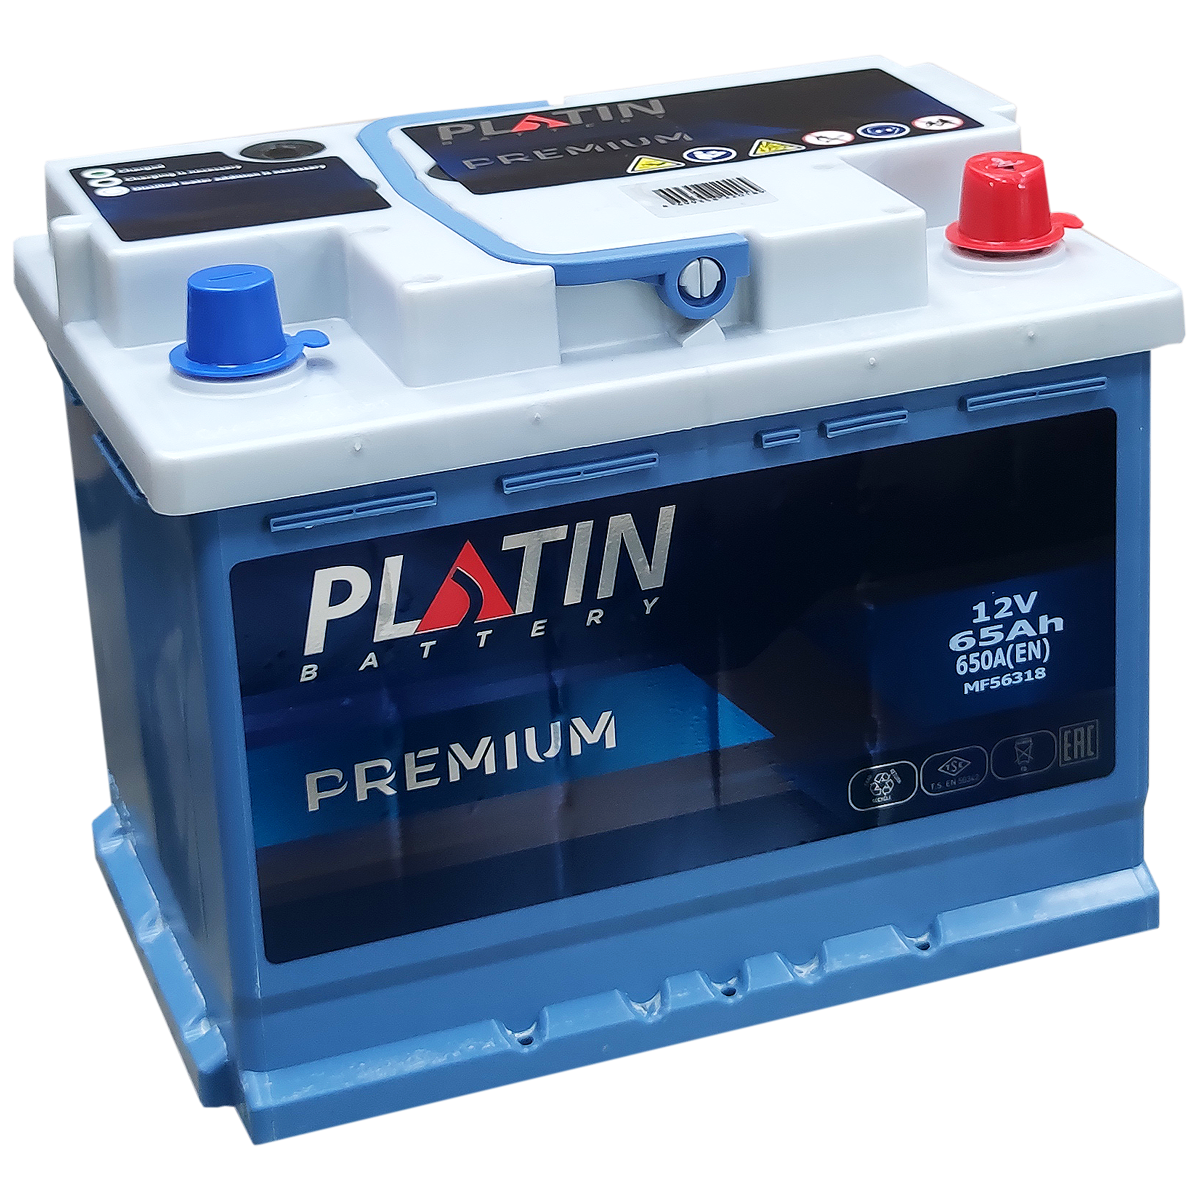 Platin Premium 65 Ач. Аккумулятор Platin 65 Ah. Platin Premium 60 Ah аккумулятор. Аккумулятор 65 Ач Premium.